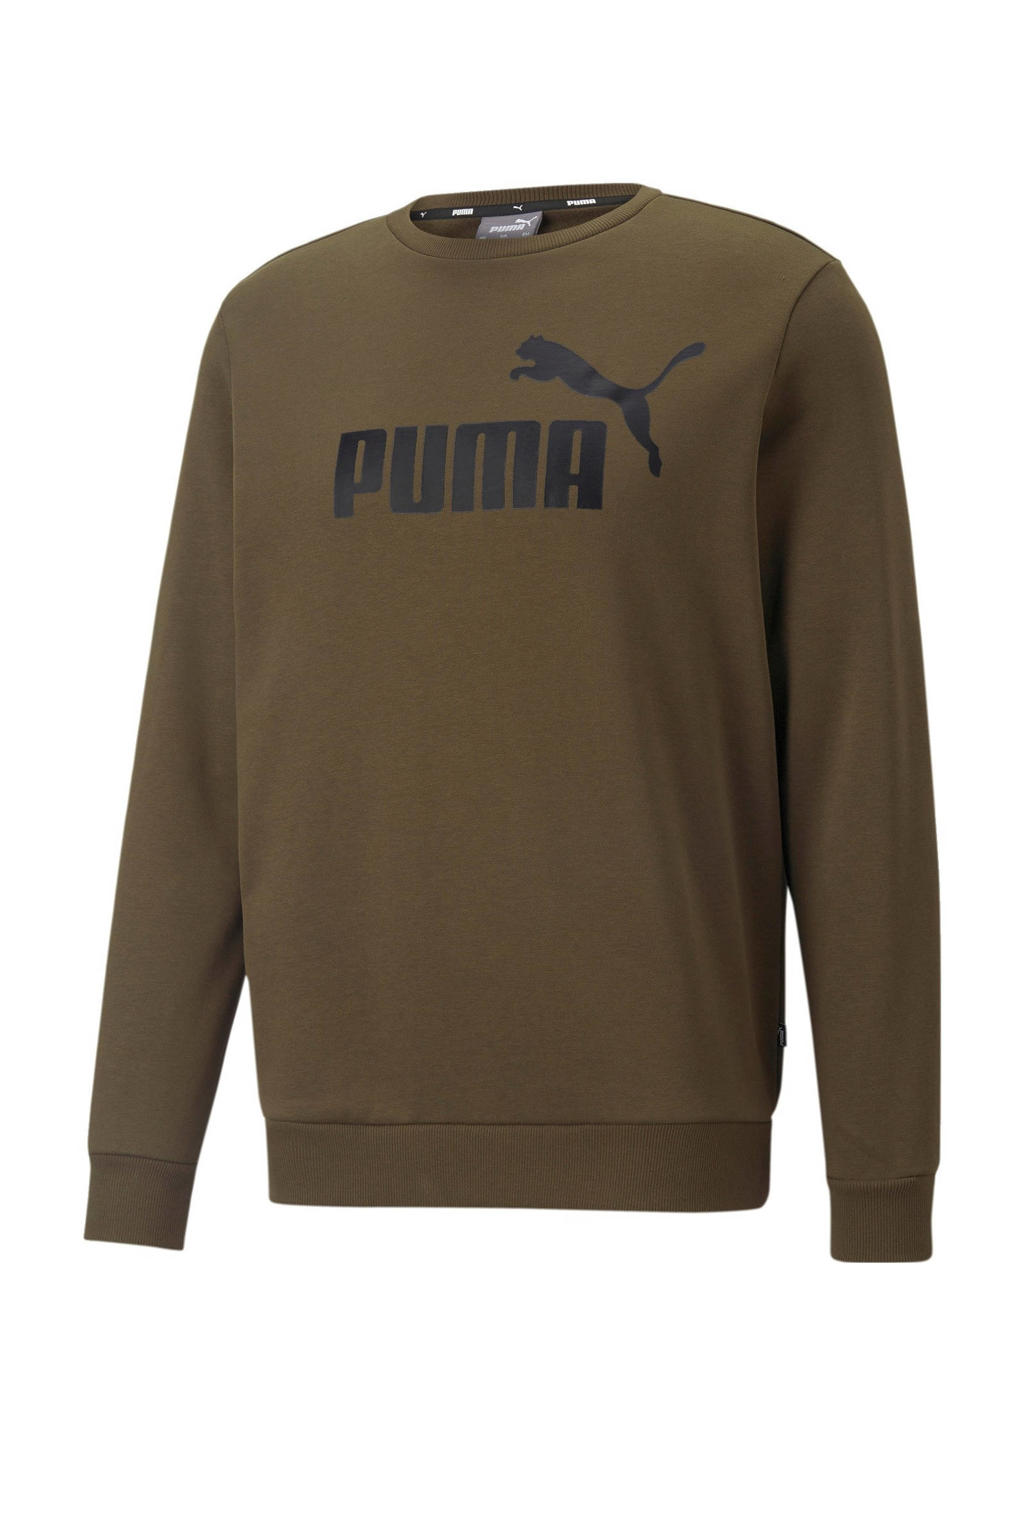 Puma sweater olijfgroen